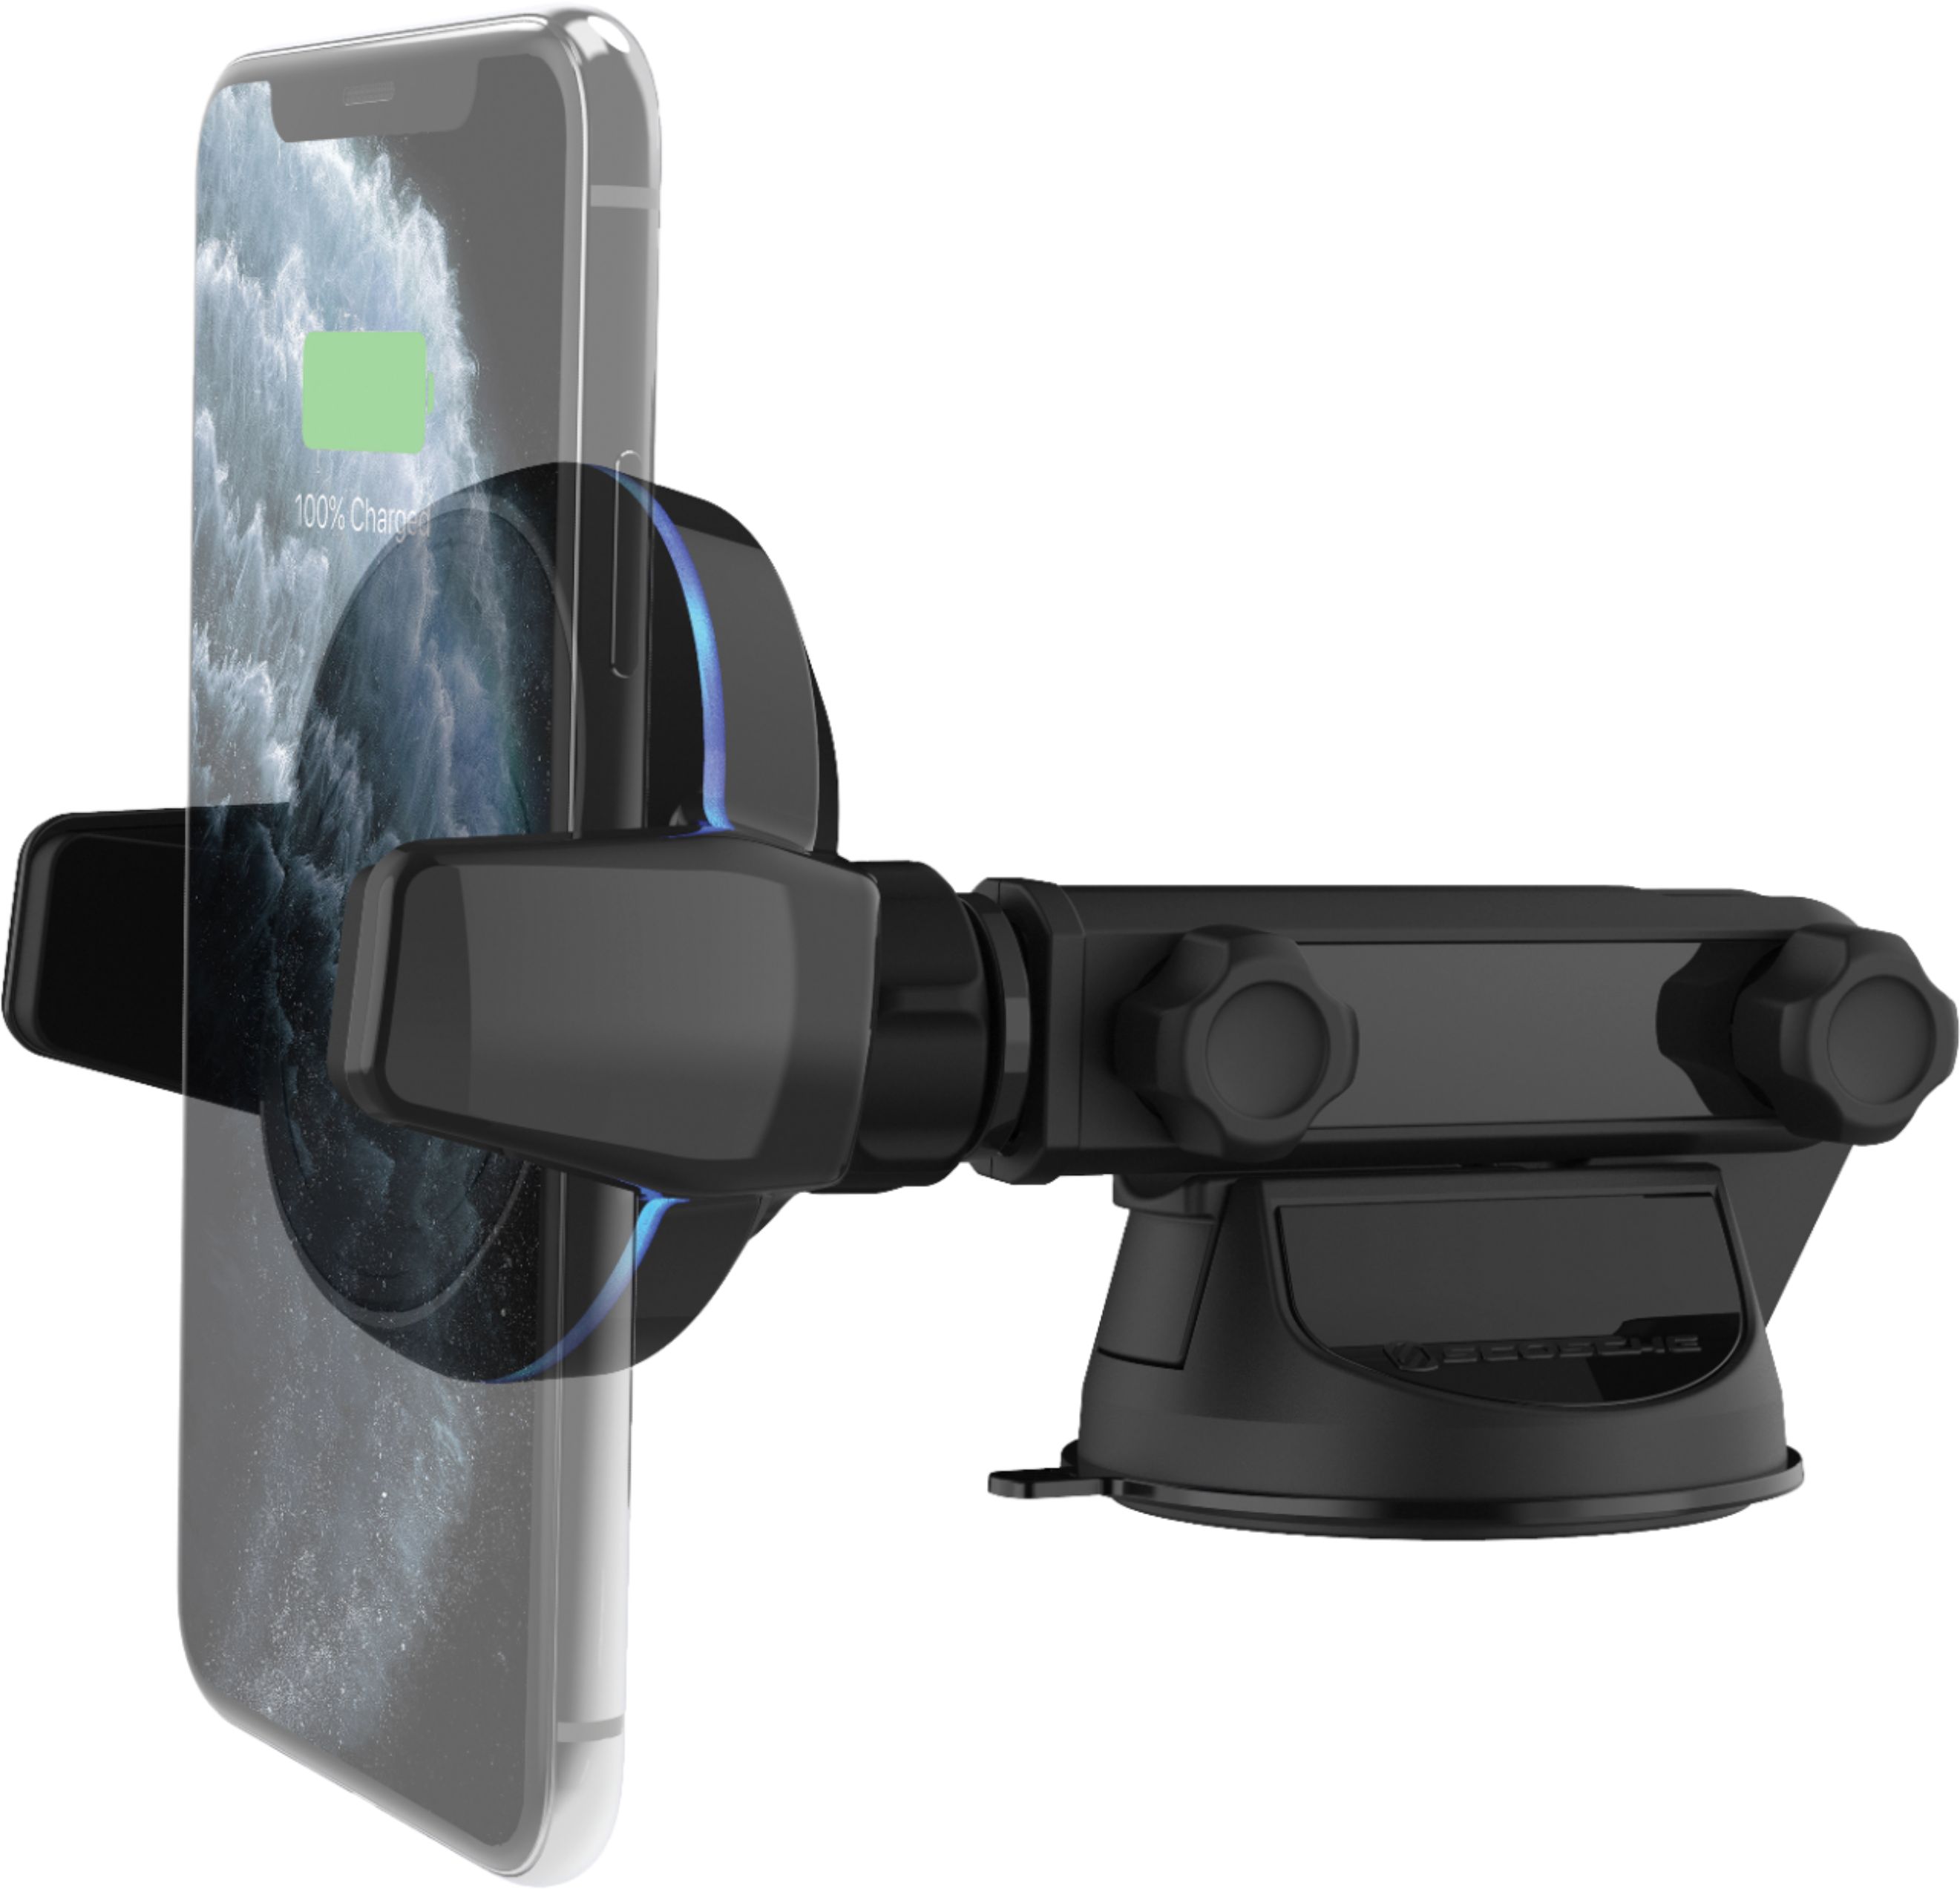 Angle View: Scosche MagicGrip Extendo Auto-Grip Qi Wireless Charging Telescoping Window/Dash Mount. - Black